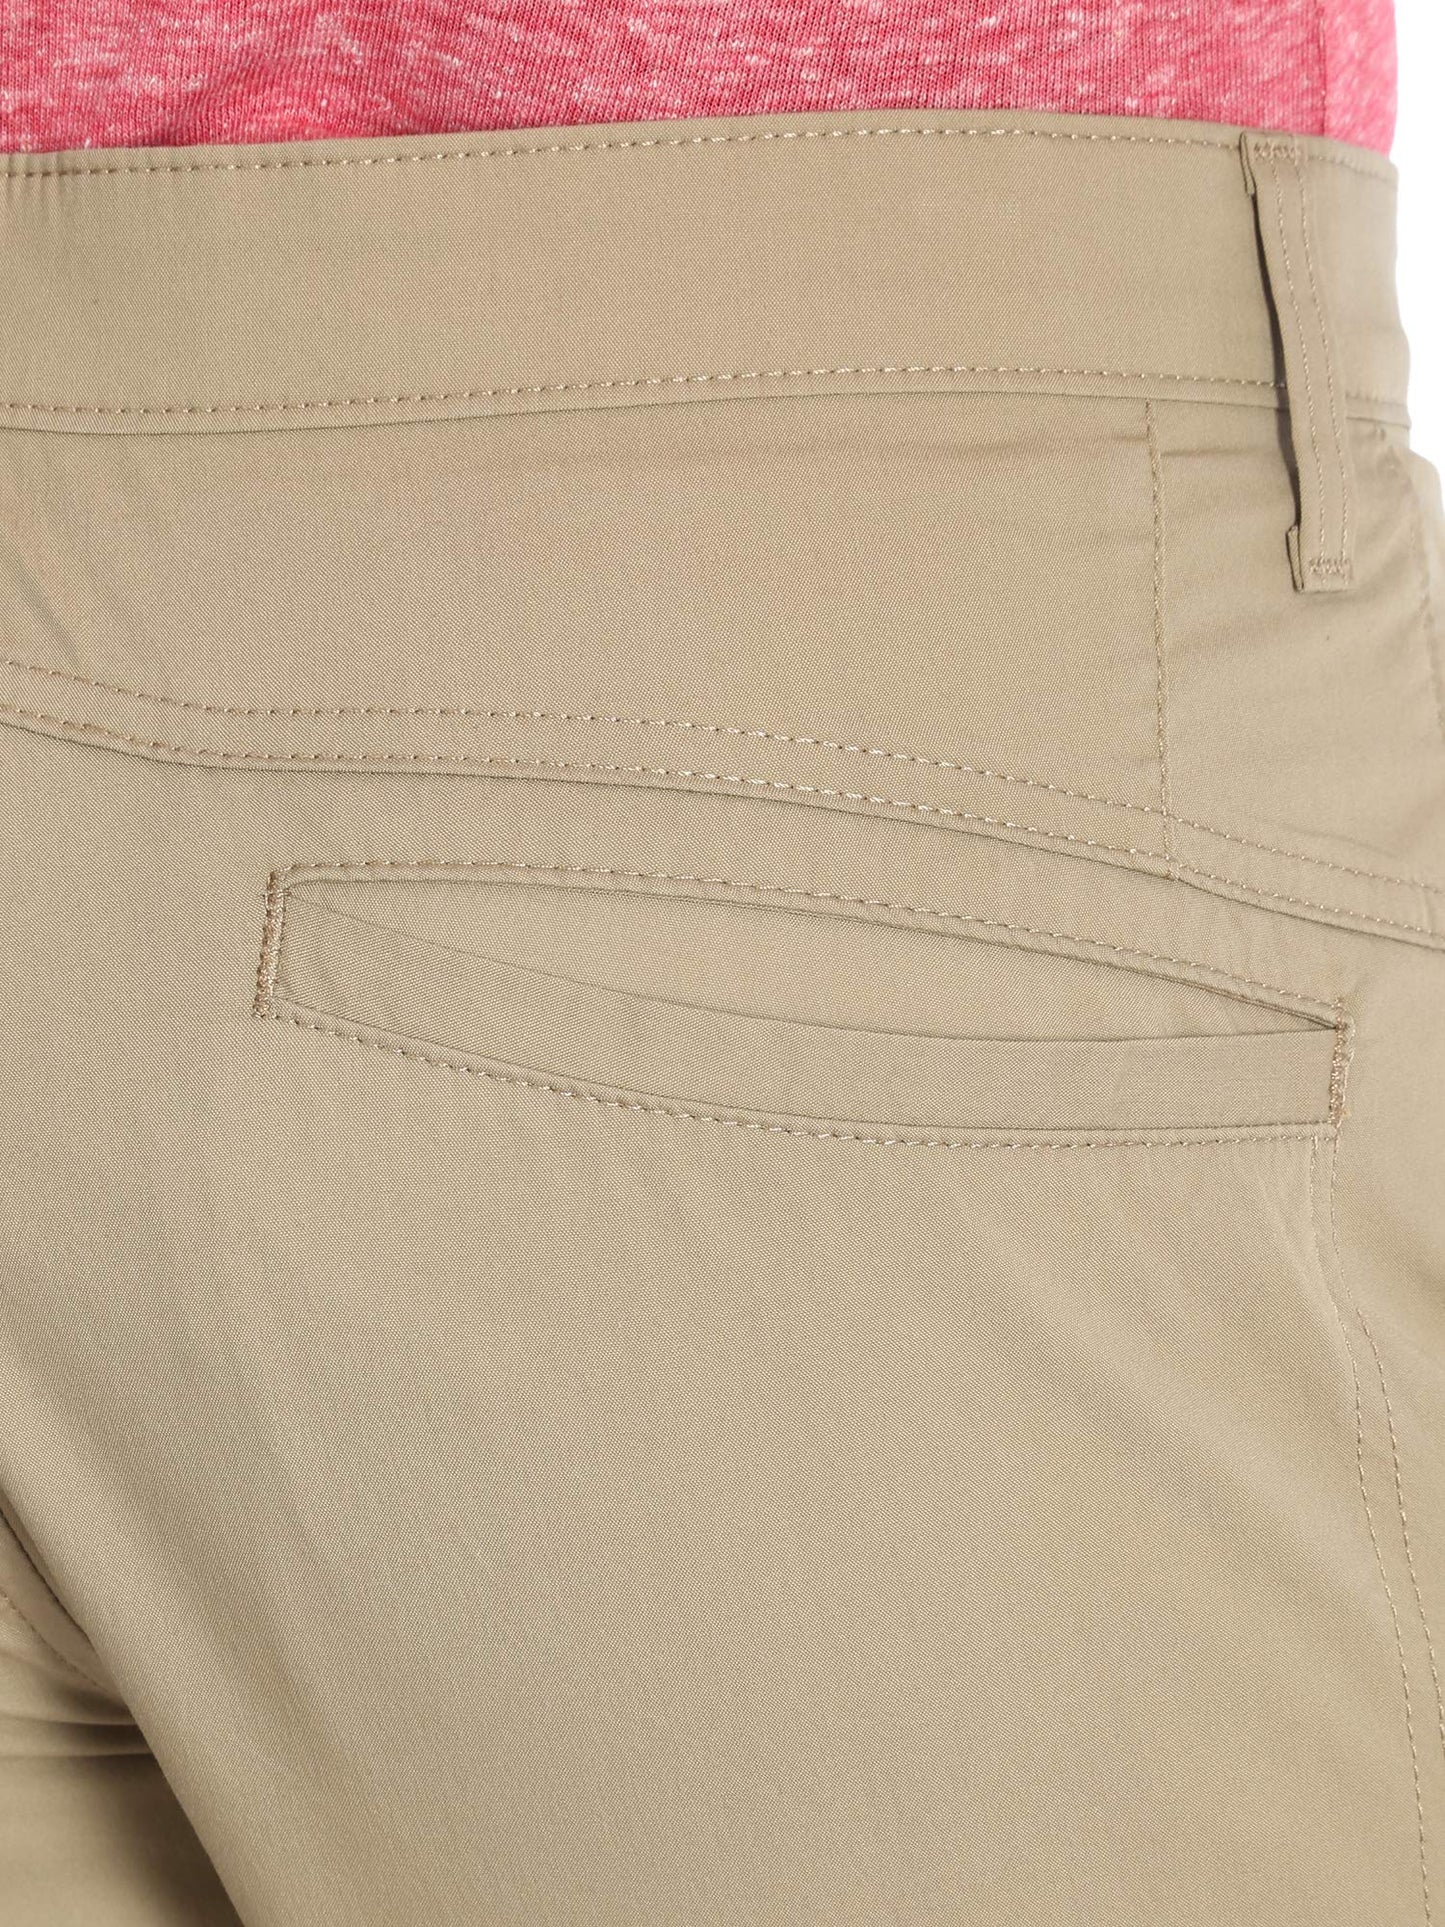 Wrangler Authentics Men's Performance Comfort Flex Flat Front Short, Dark Khaki, 40